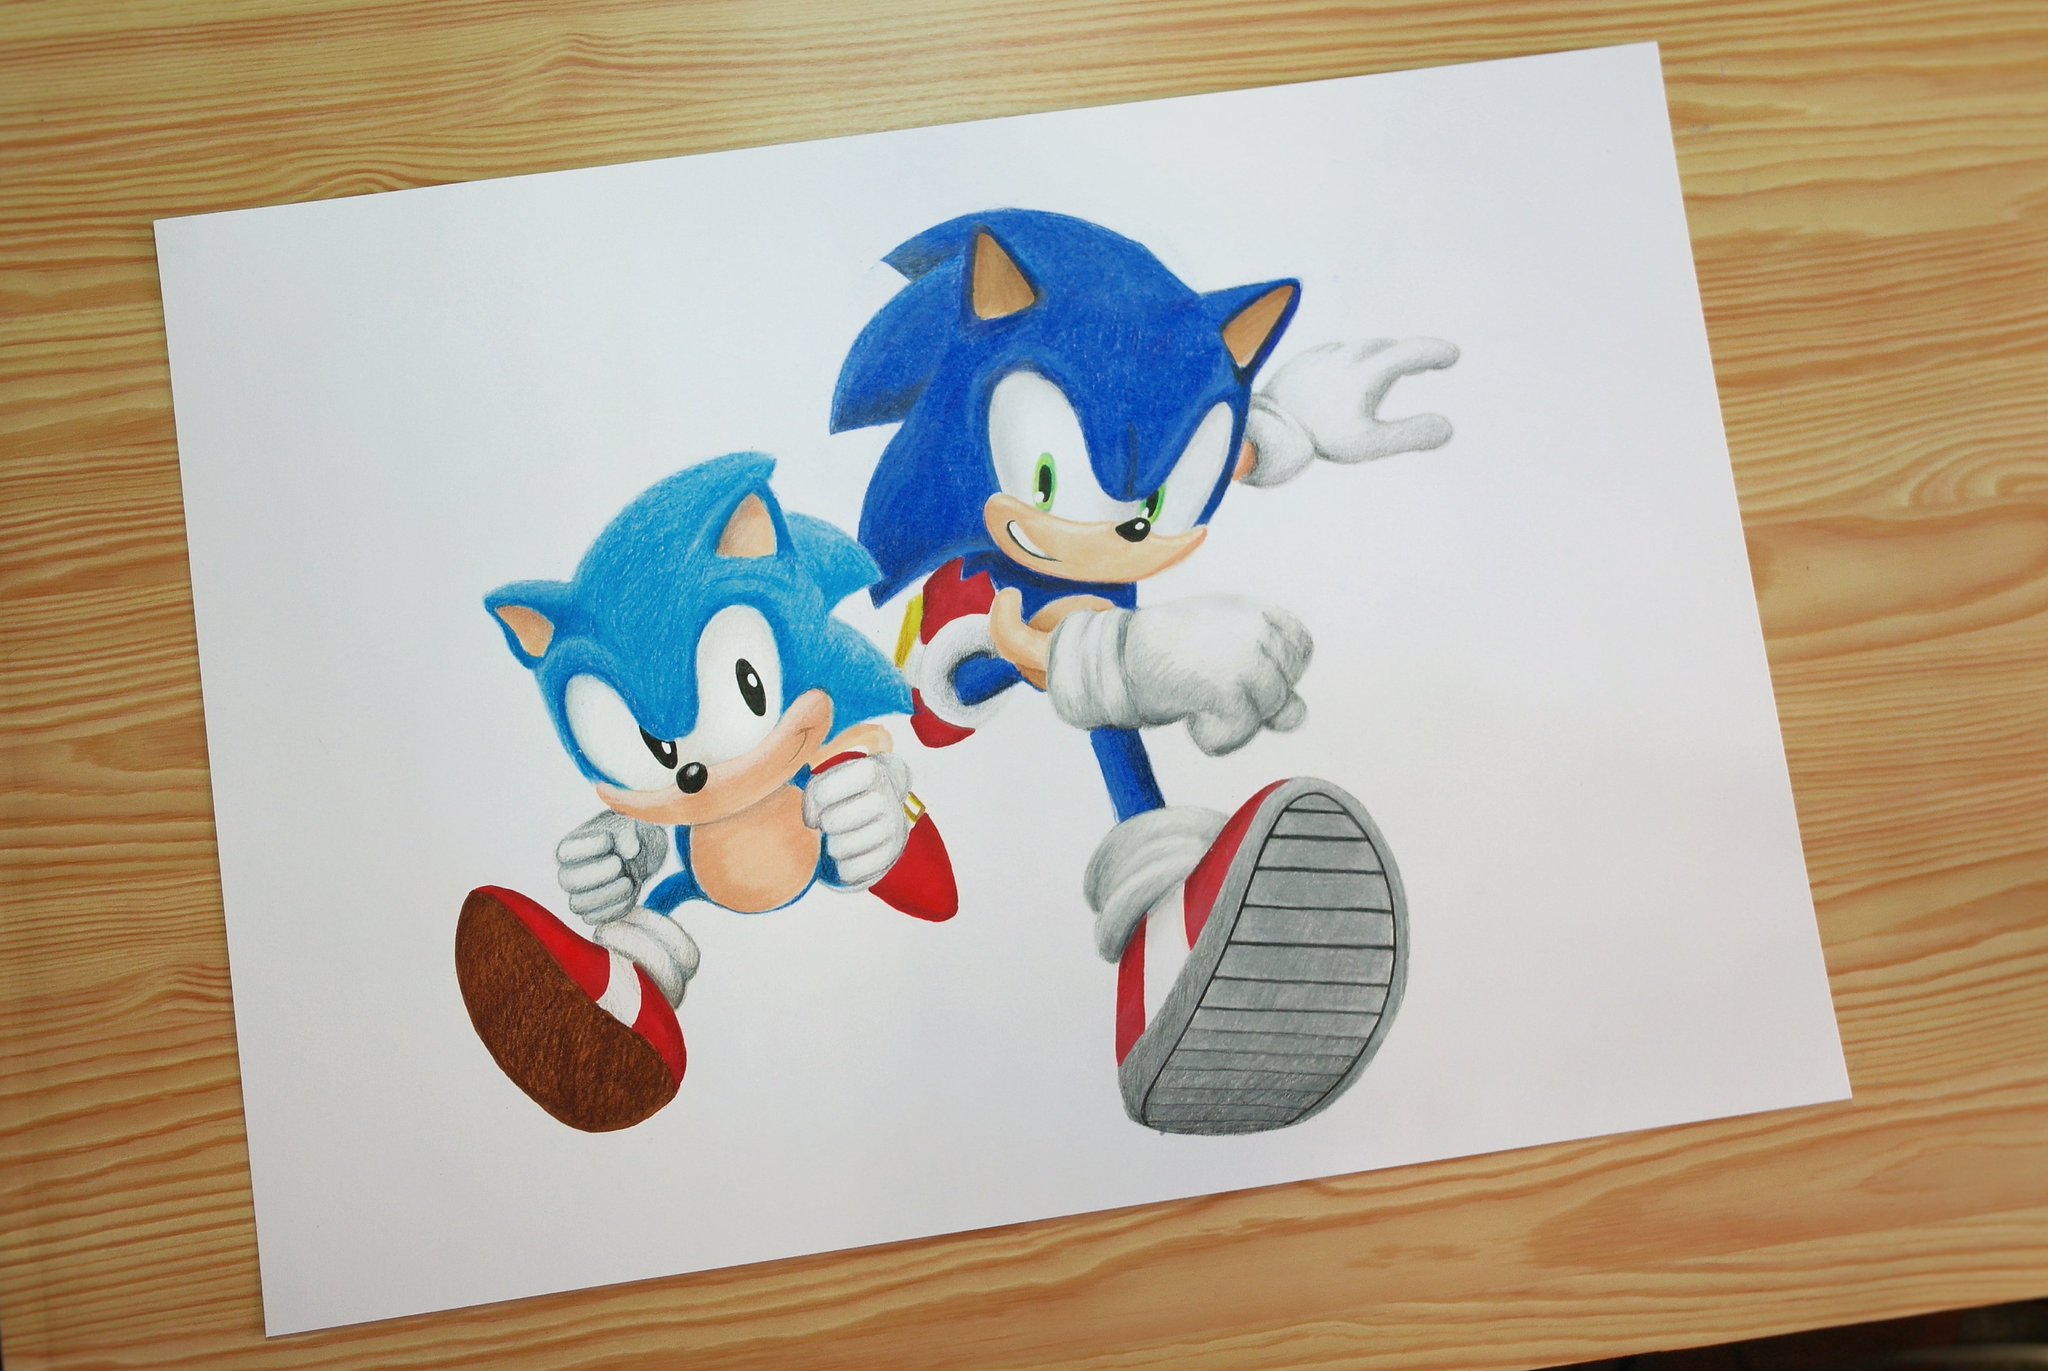 Art by Julia Blakita on X: Speed Drawing Sonic Mania Mean Bean Machine  #sonic #sonicmania #sonicthehedgehog #sega #classicsonic #drawing  #sonicmaniahd #speeddrawing #nintendo3ds #nintendoart #nintendoswitch  #sonicart Please watch the video here: https